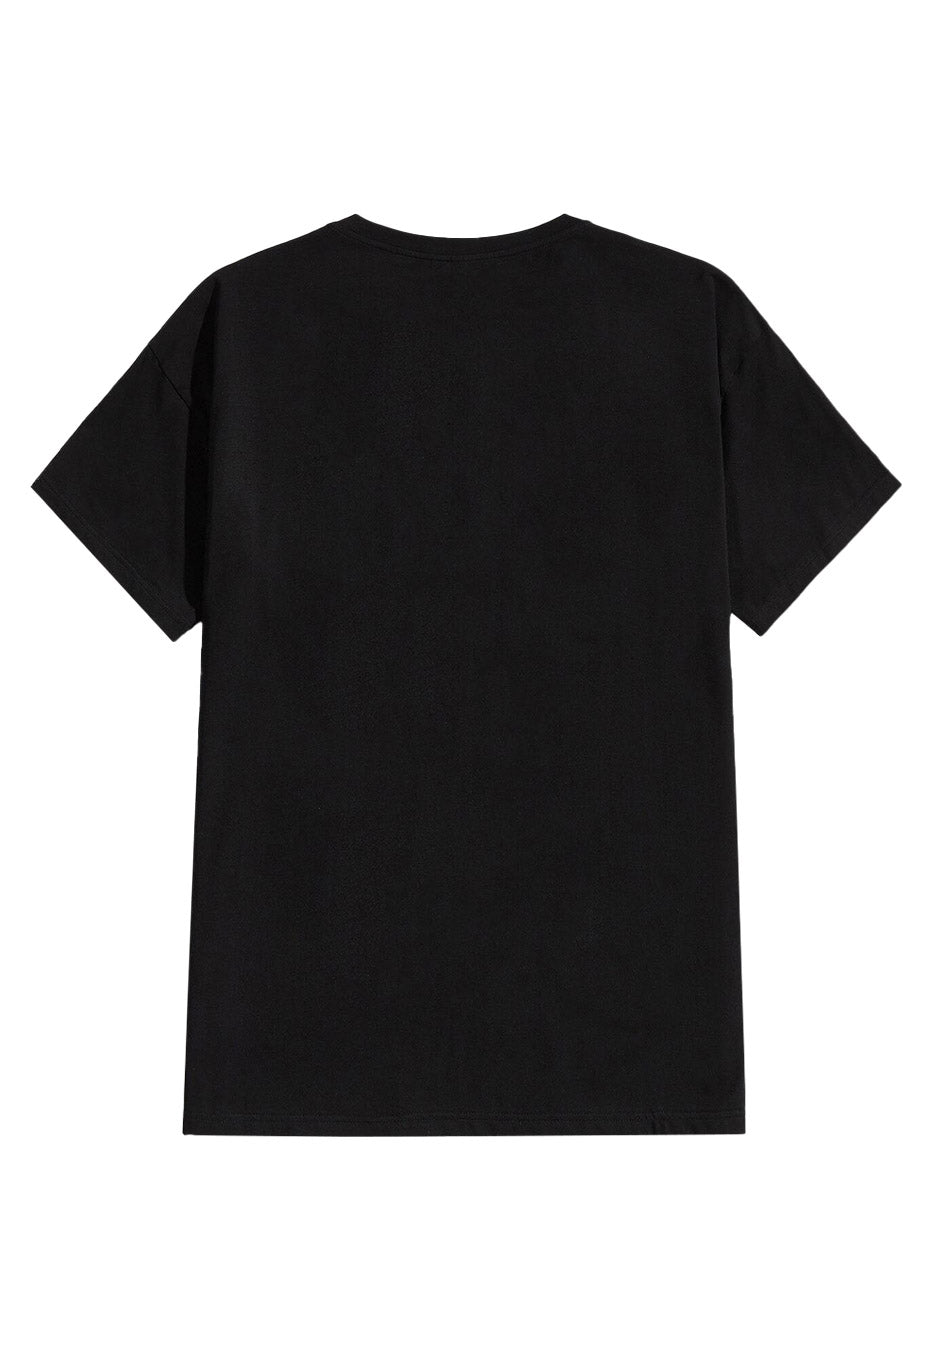 Emmure - Seance - T-Shirt | Neutral-Image